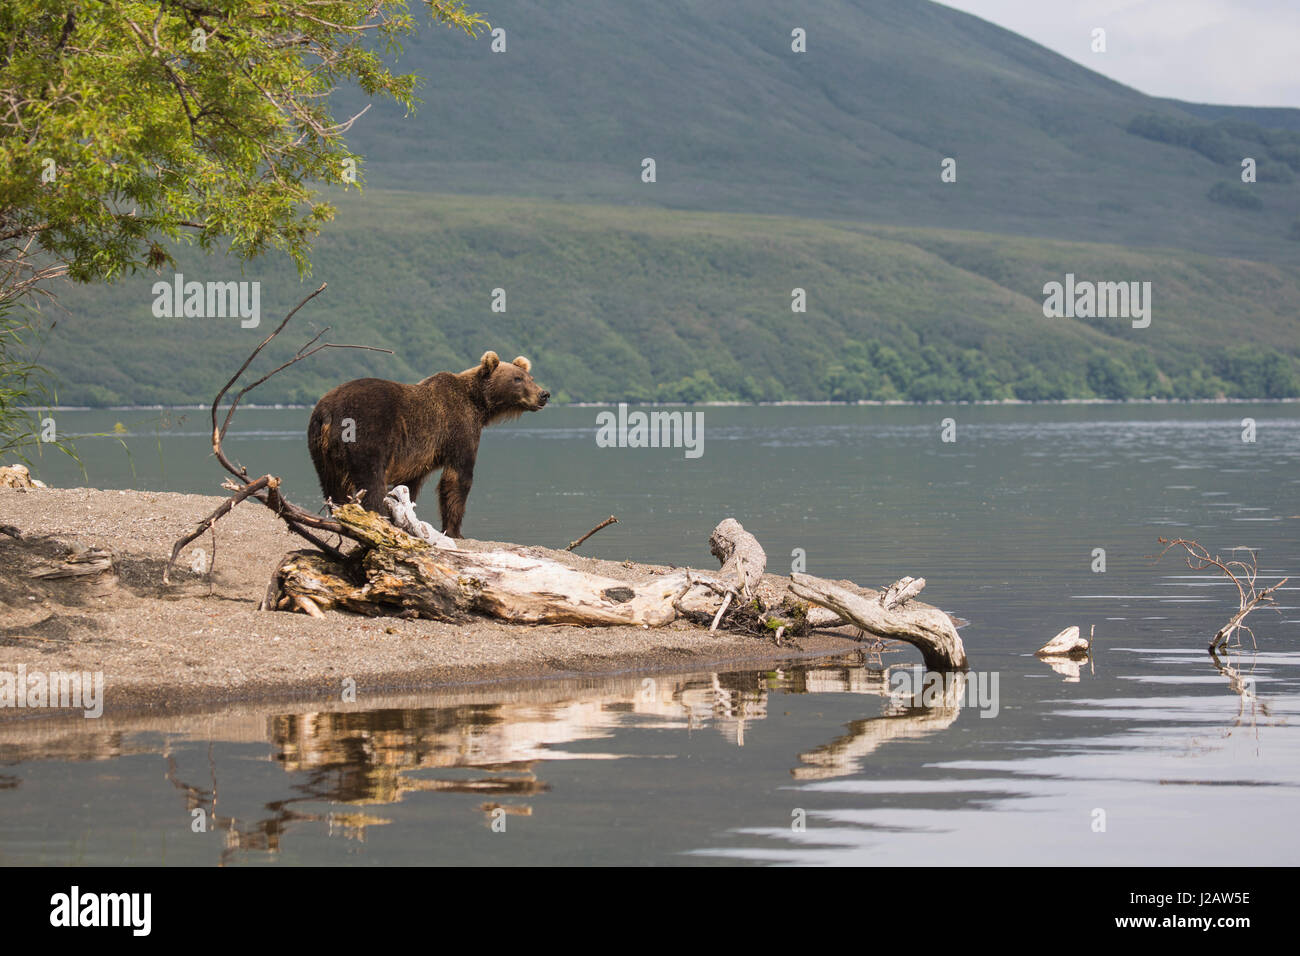 Kamchatka brown bear by edge of lake, Kurile Lake, Kamchatka Peninsula, Russia Stock Photo